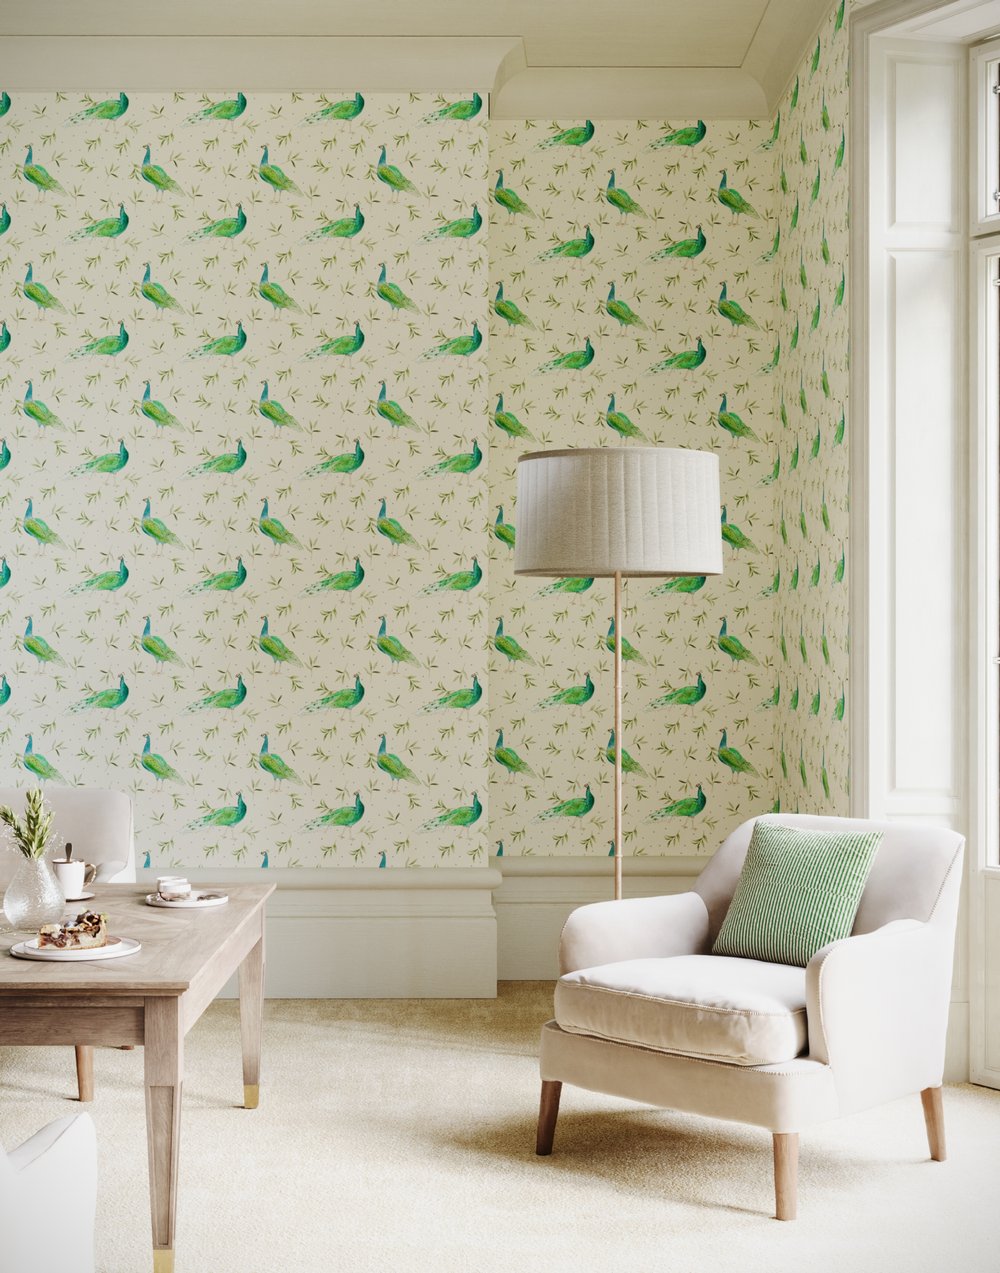 Peacock designer wallpaper-country home interior